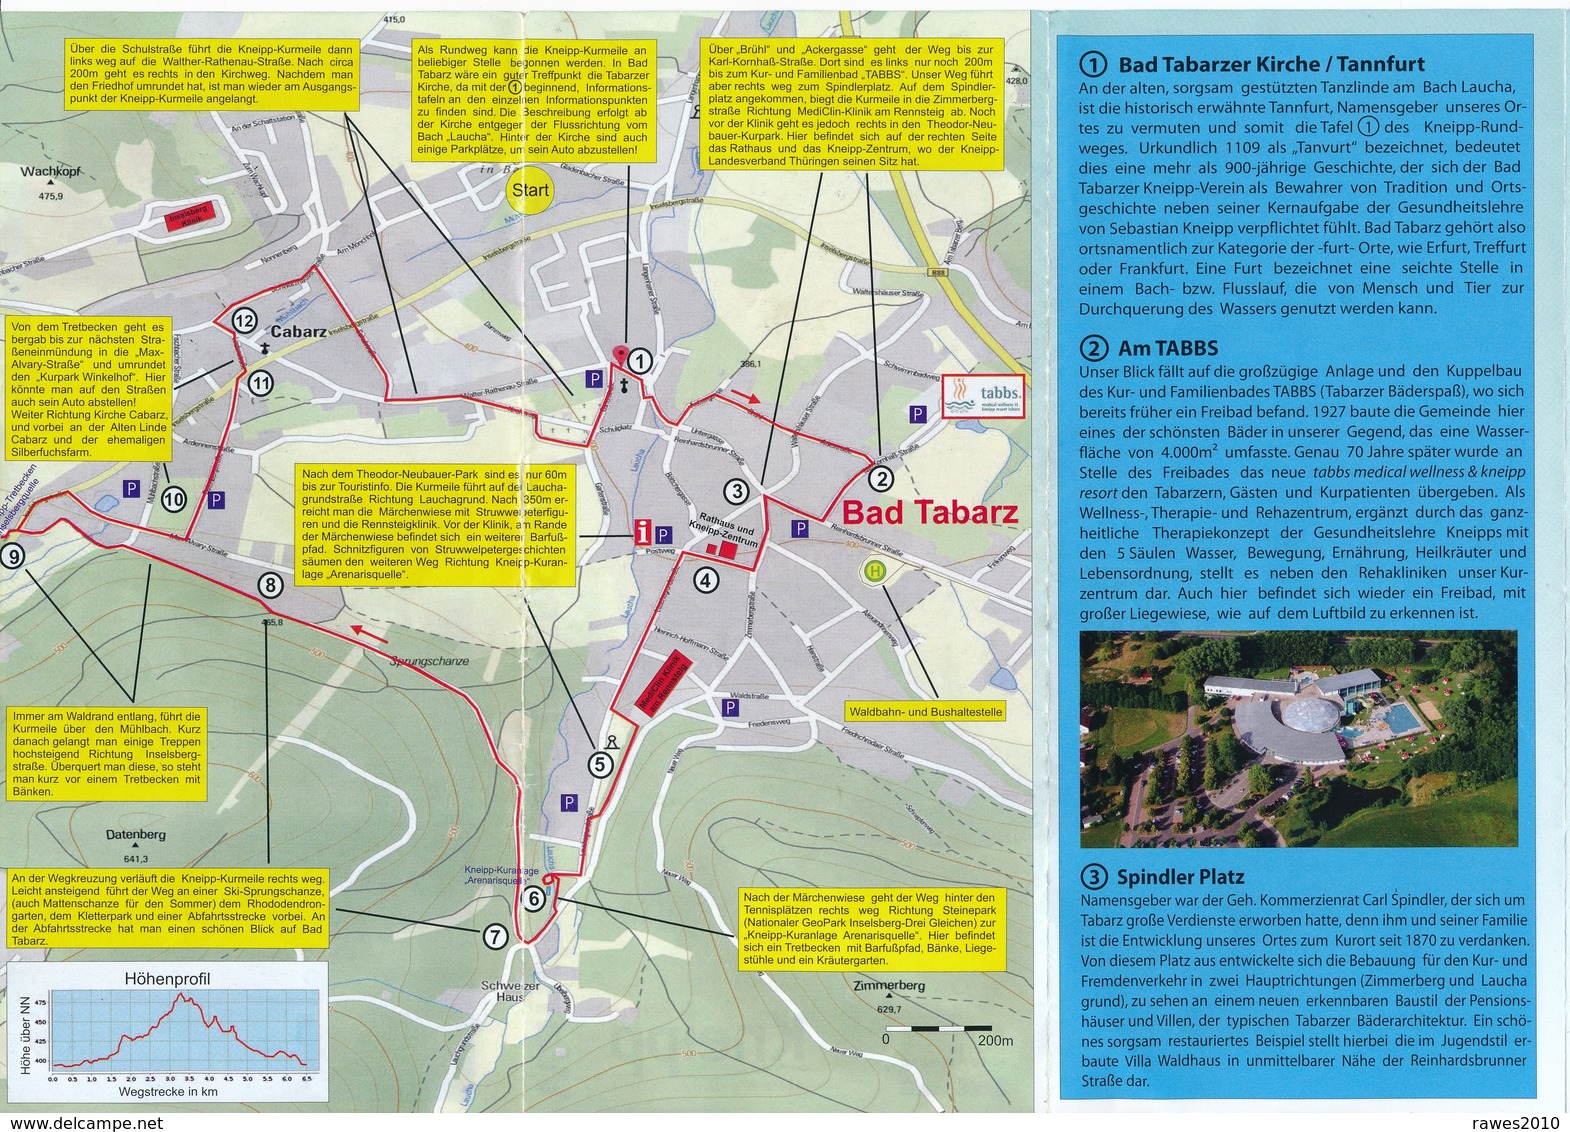 Bad Tabarz Kneipp-Kurmeile Wanderwege Faltblatt 4 Seiten - Reiseprospekte